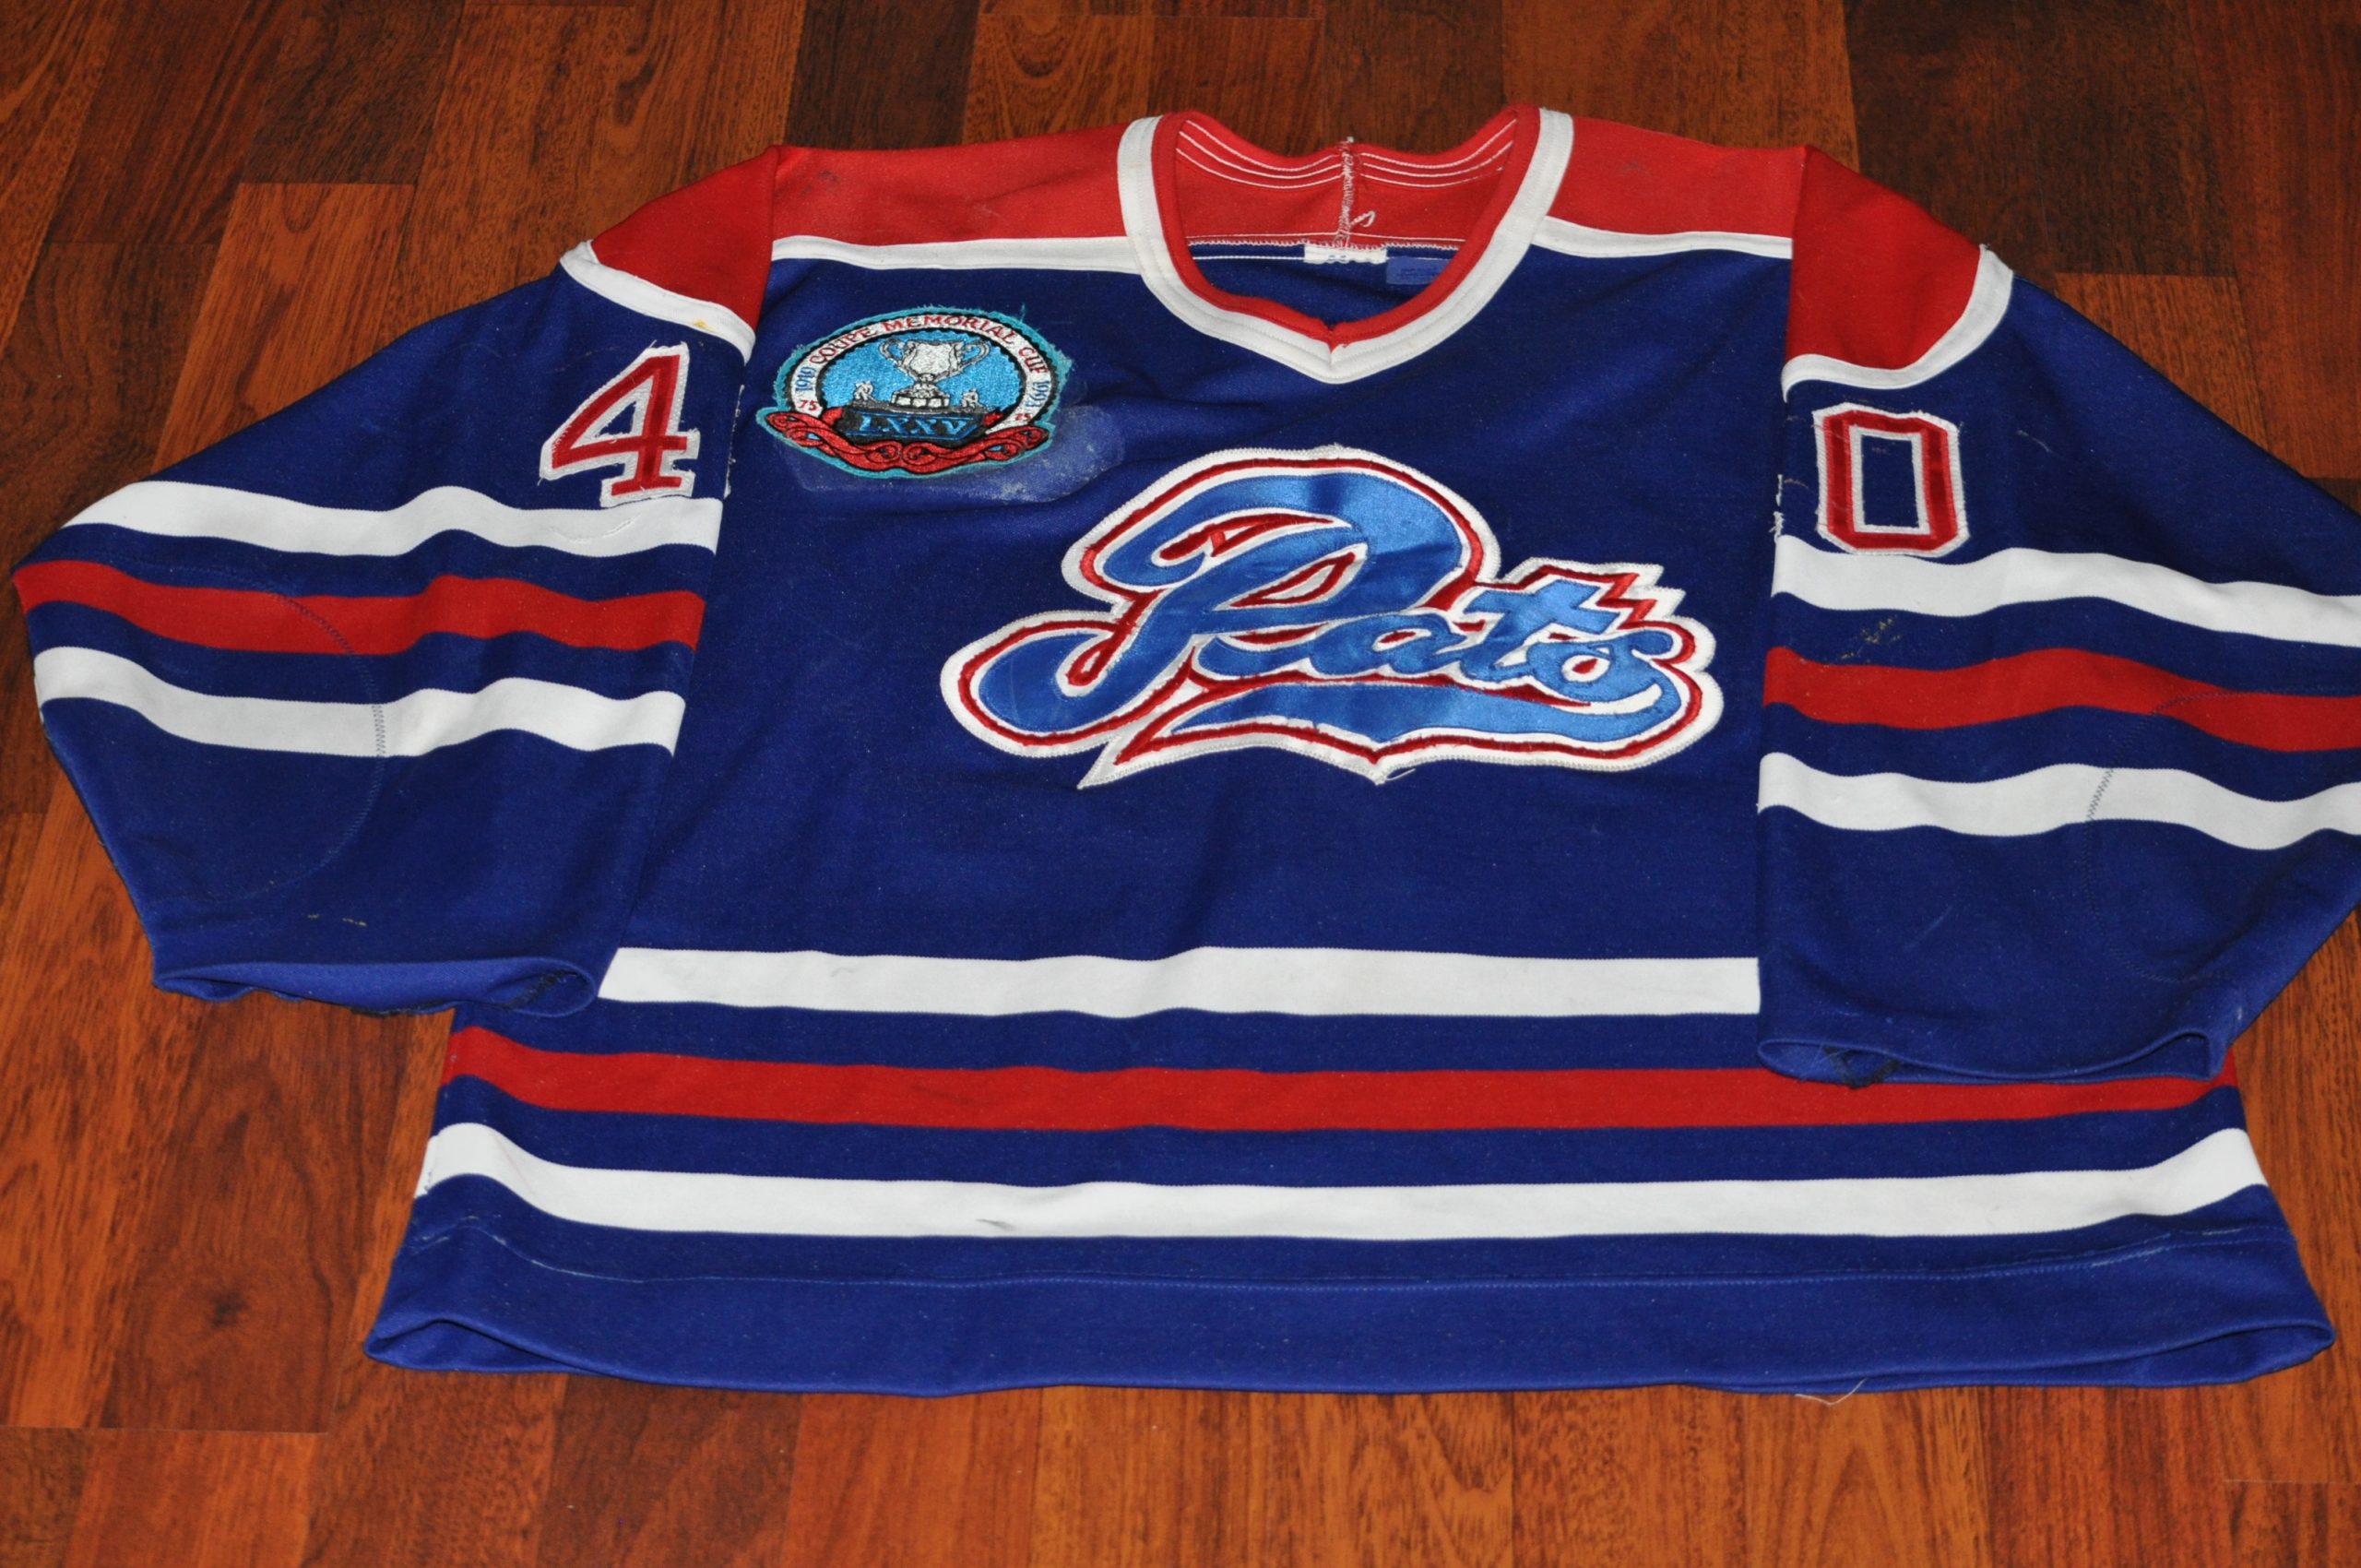 1995 Regina Pats #12 Joey Bouvier – Hockey Jersey